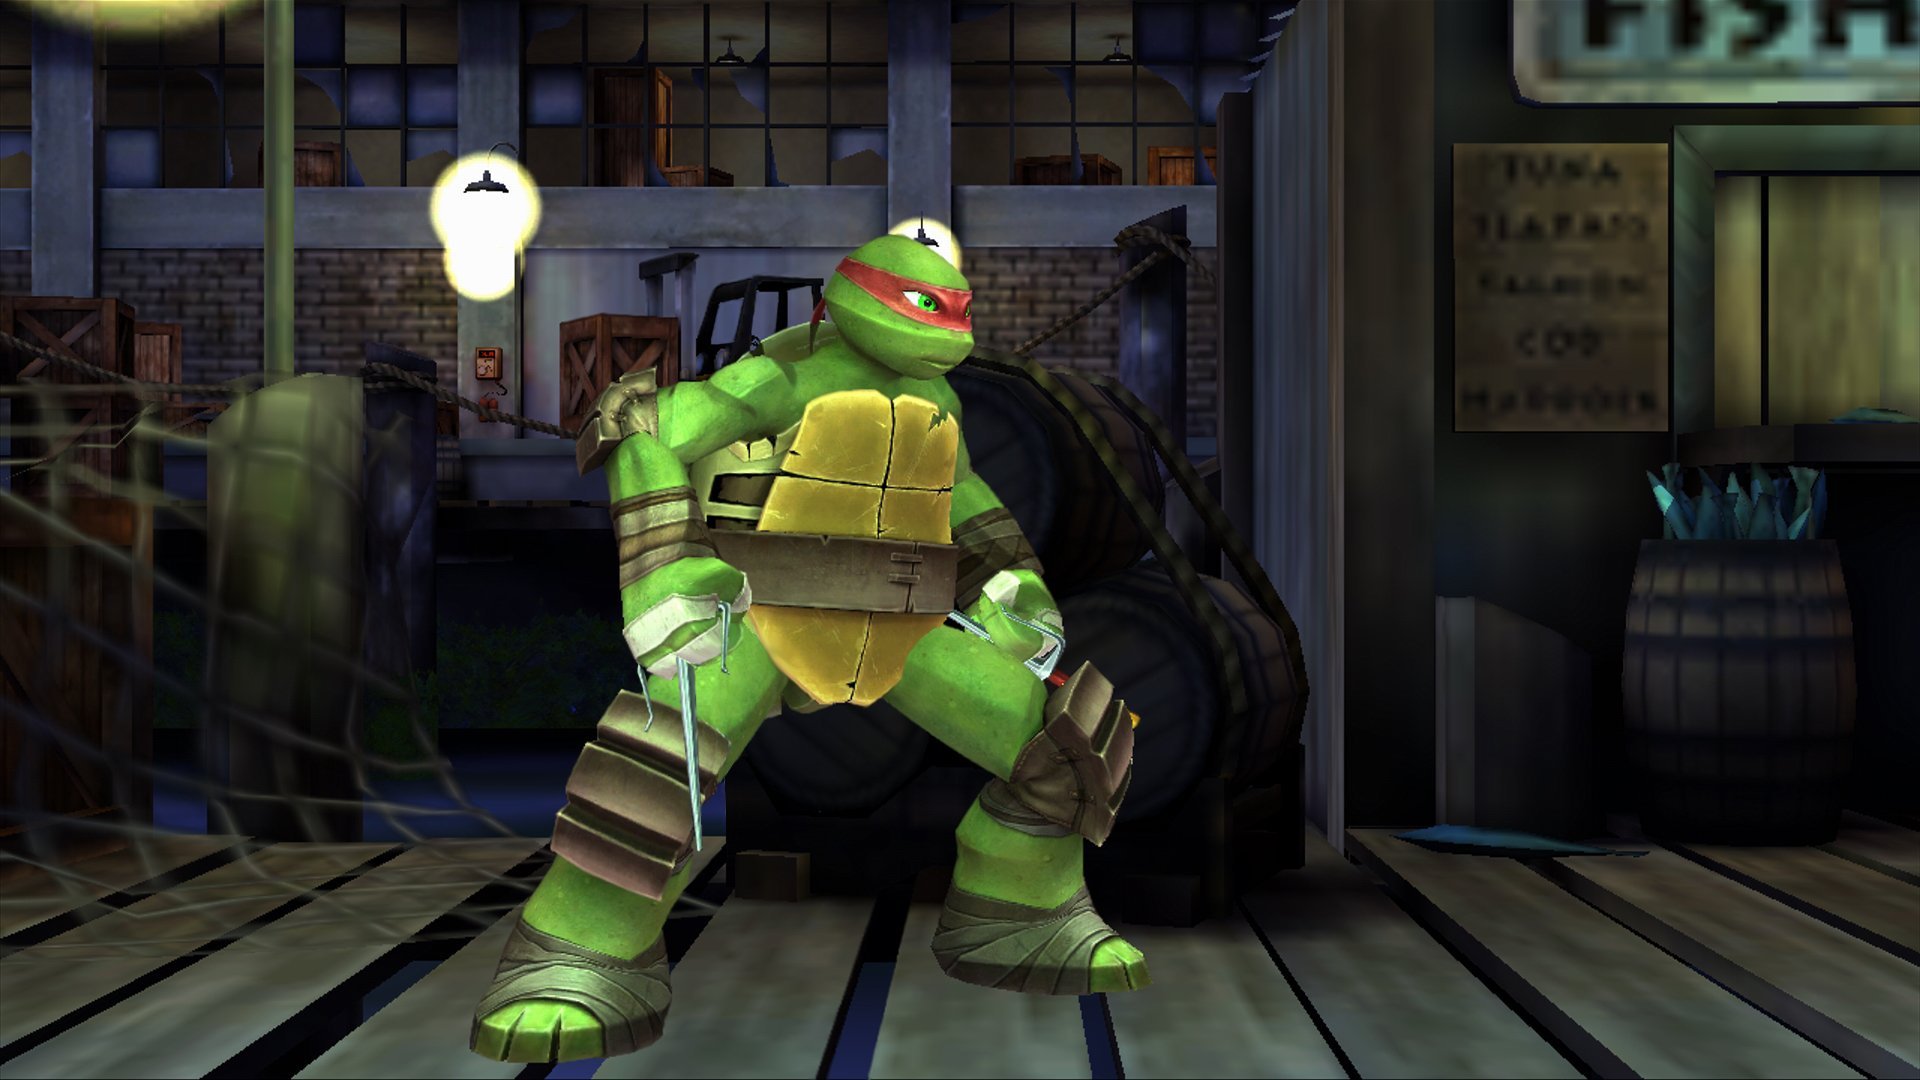 Teenage Mutant Ninja Turtles: Danger of the OOZE - Nintendo 3DS (Renewed)